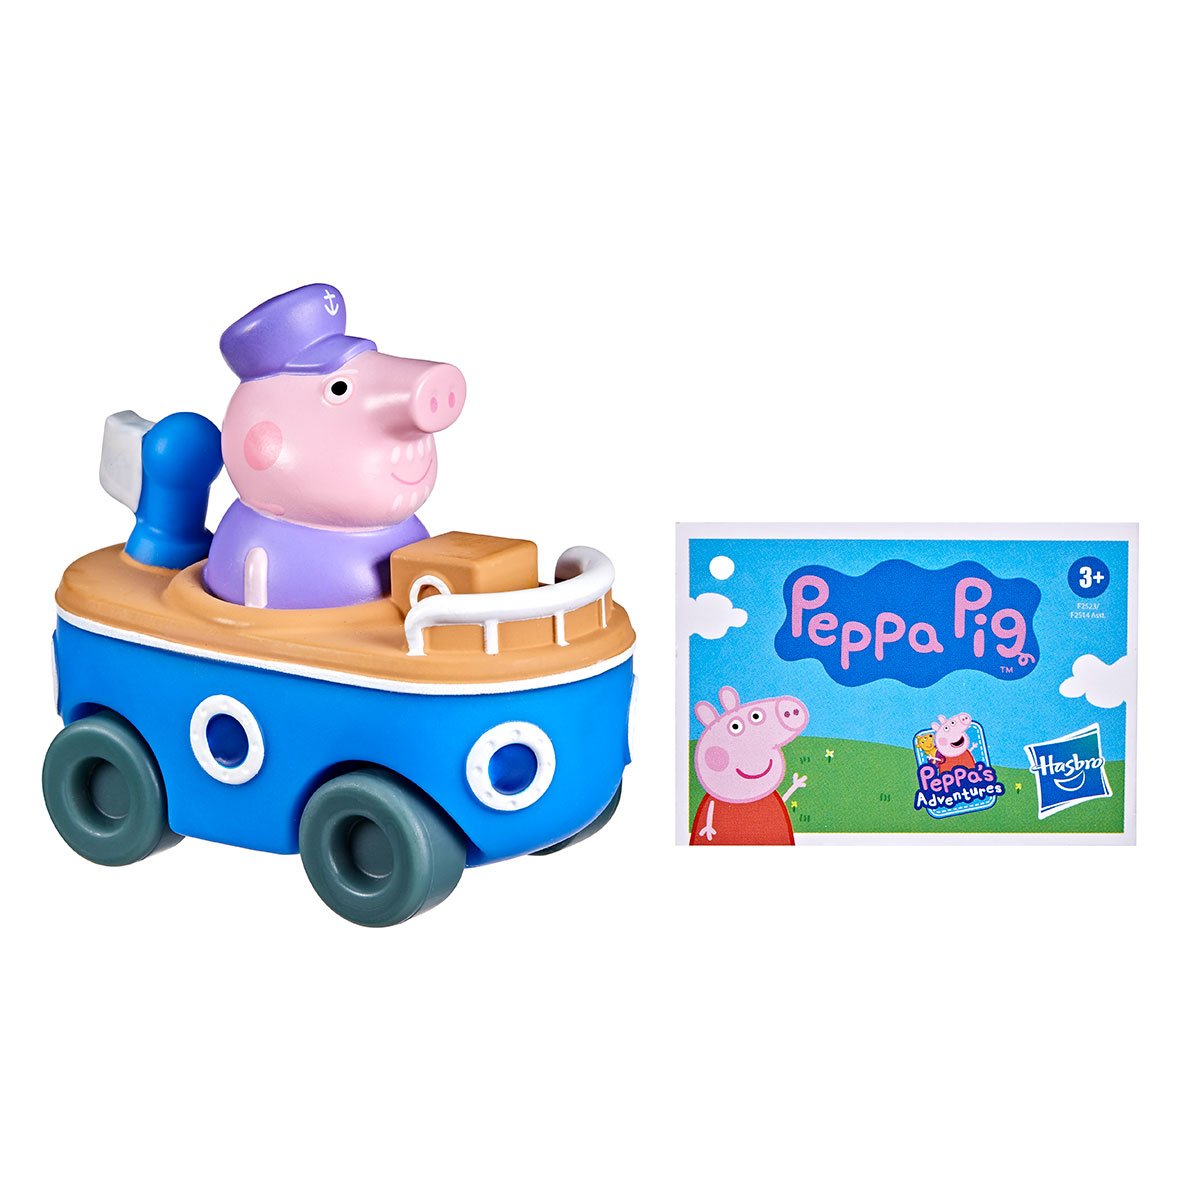 Мини-машинка Peppa Pig Дедушка Пеппы на кораблике (F2523) - фото 2